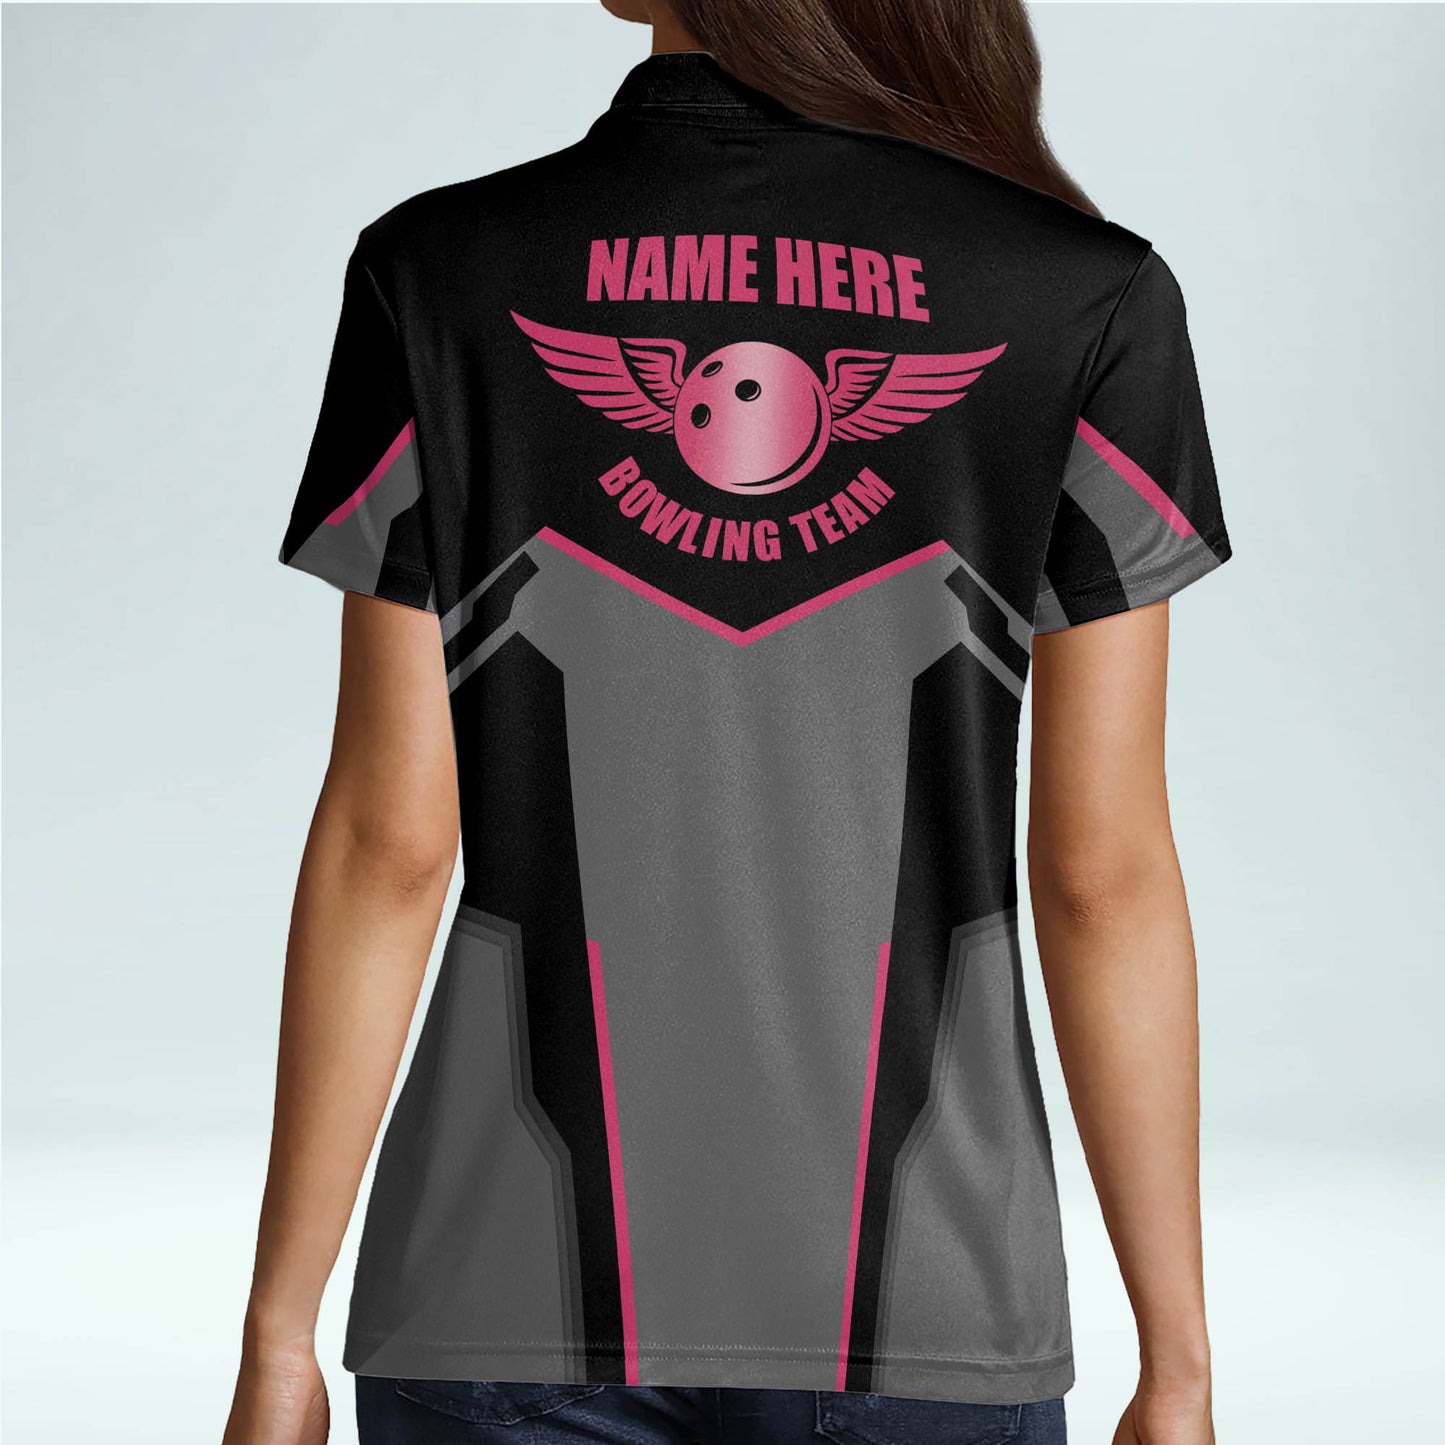 Custom Bowling Shirts For Women - Personalized 3D Pink Funny Bowling Shirts - Women's Bowling Team Shirts - Bowling Jersey With Name For Women BW0075